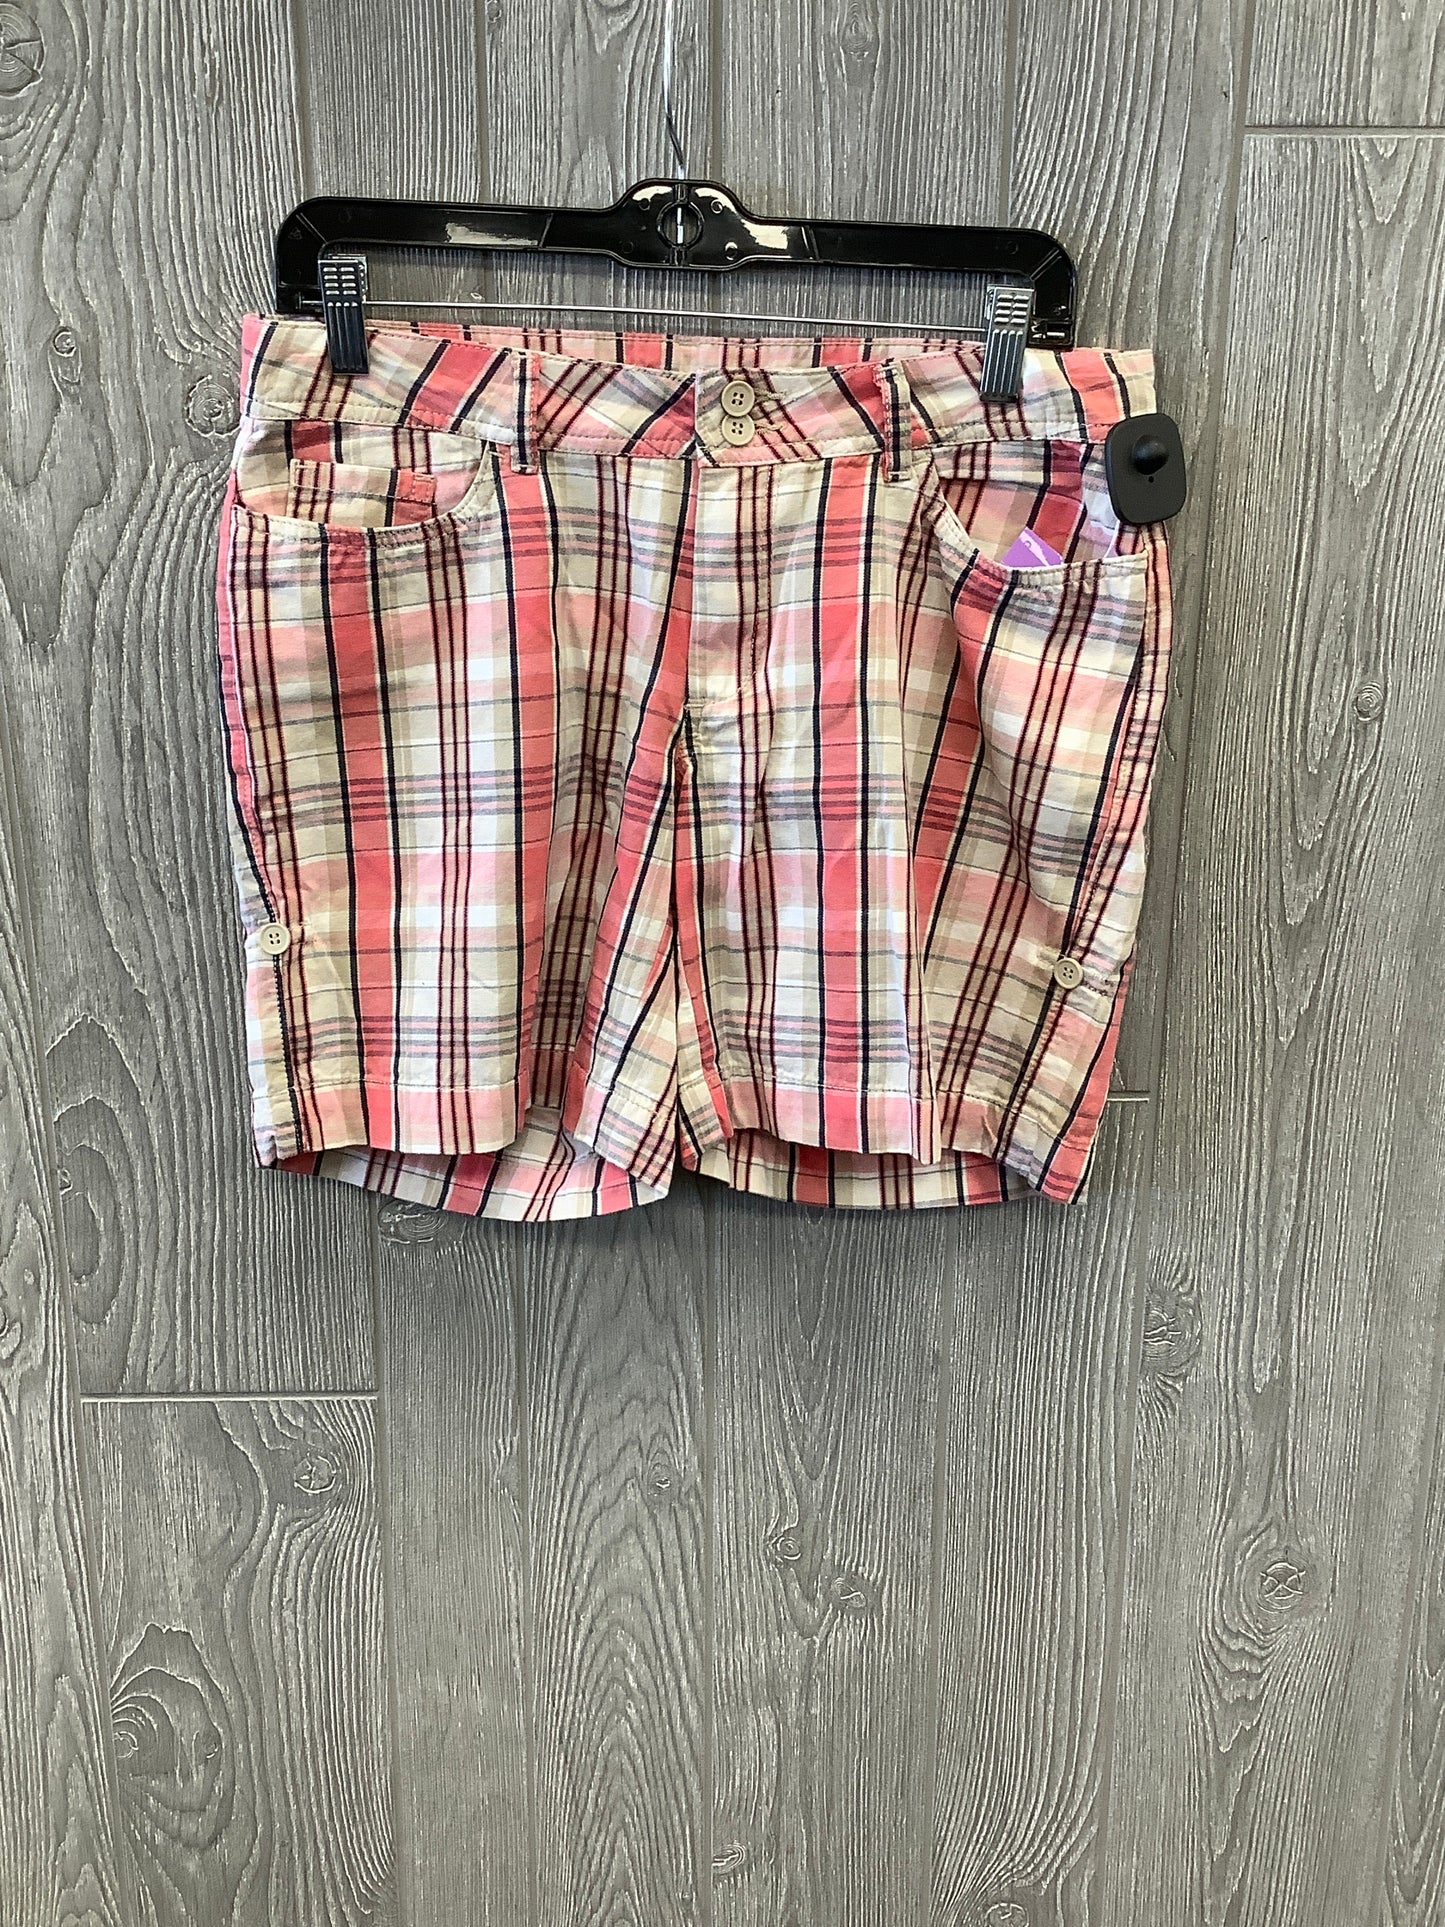 Shorts By Falls Creek  Size: 8